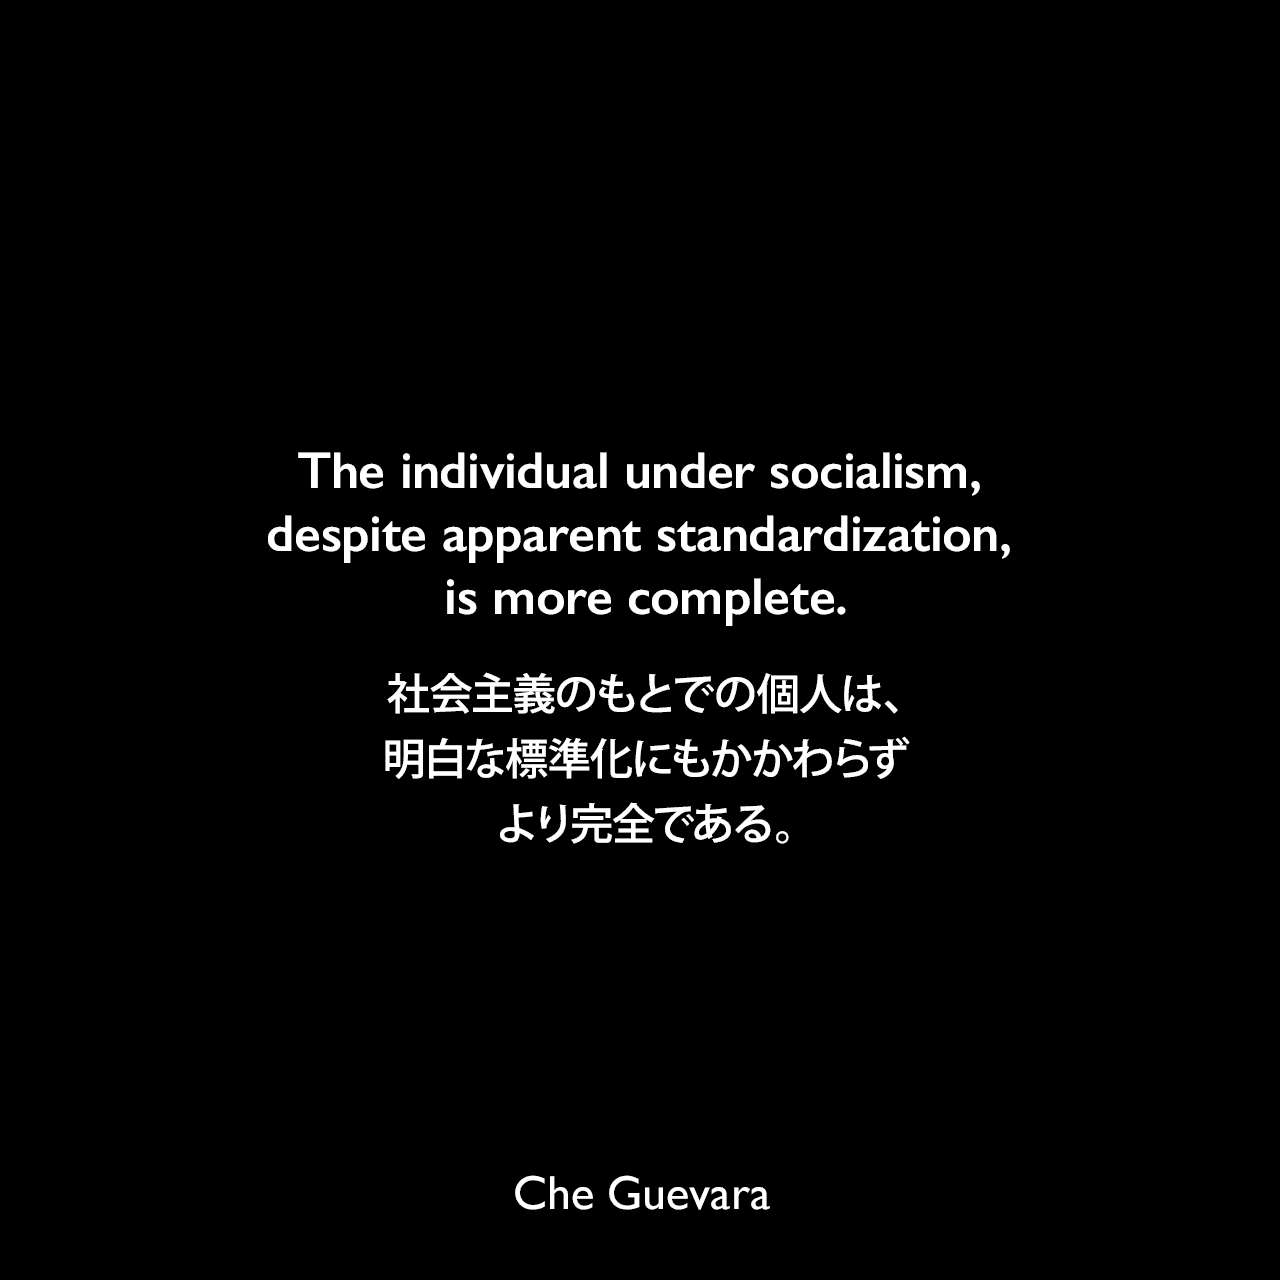 The individual under socialism, despite apparent standardization, is more complete.社会主義のもとでの個人は、明白な標準化にもかかわらずより完全である。- チェ・ゲバラによる本「Socialism and man in Cuba」よりChe Guevara